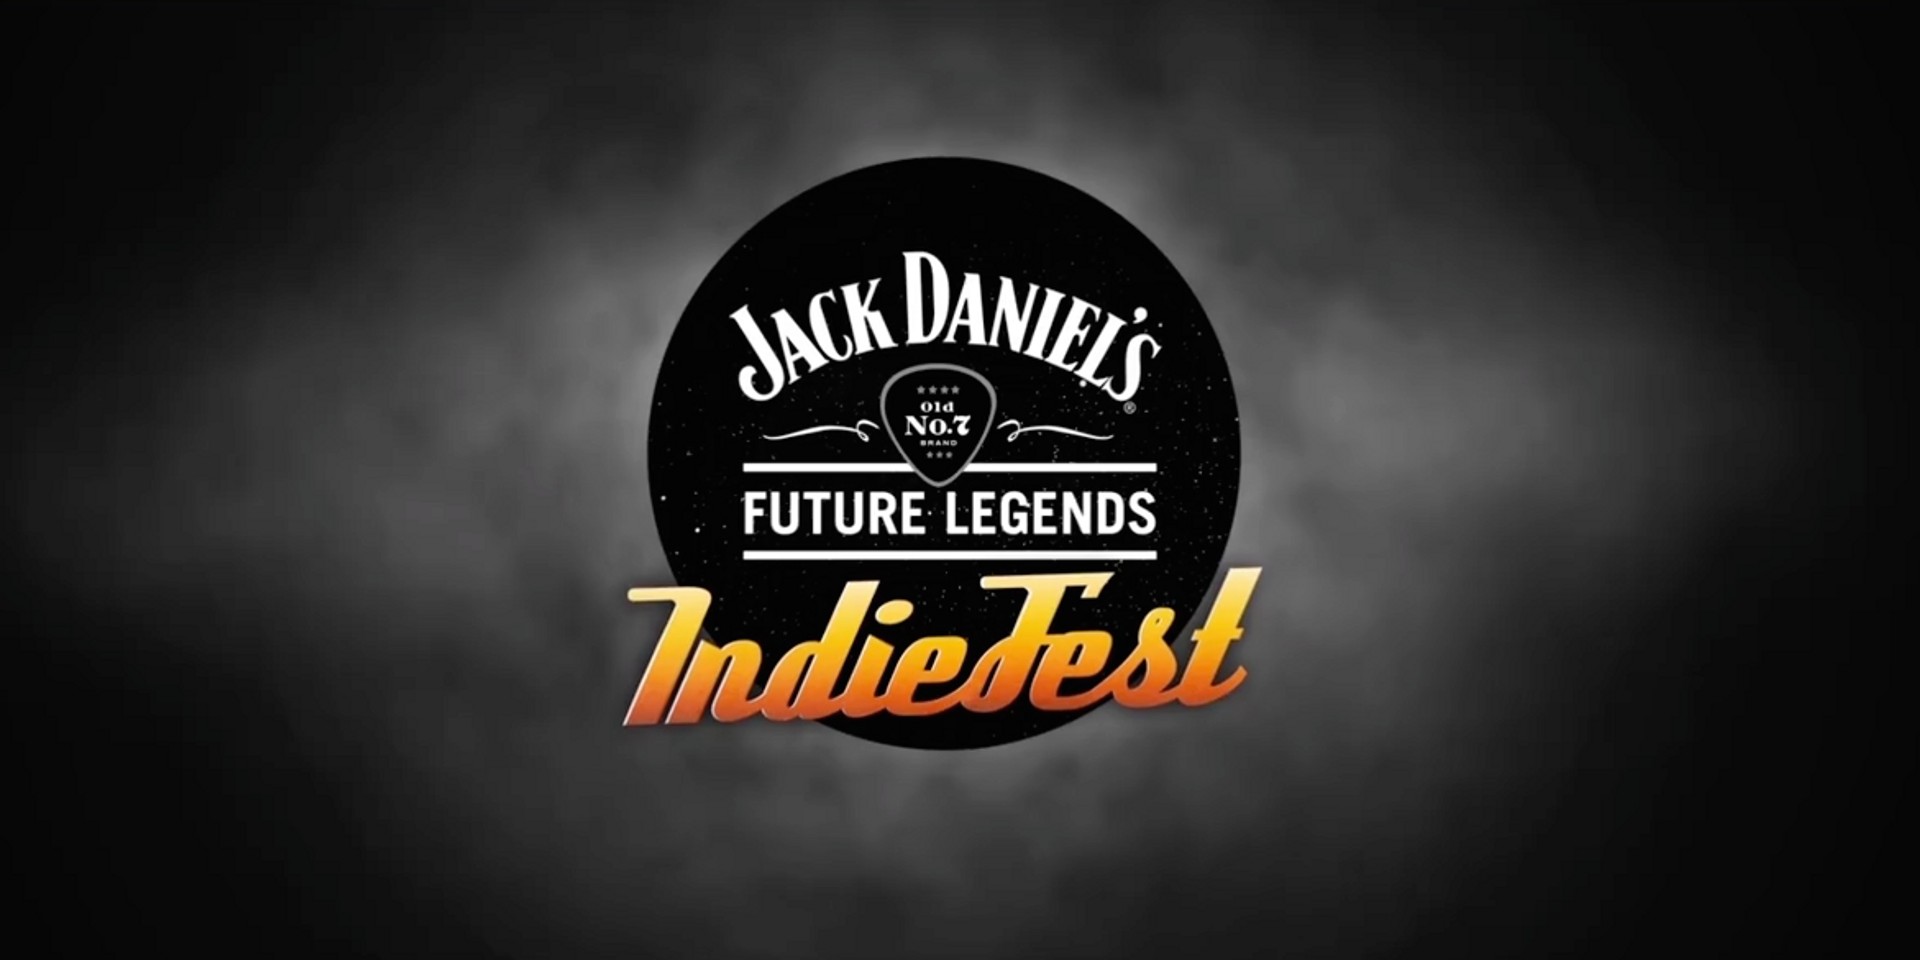 Artist Lineup for Jack Daniel's Future Legends Indiefest 2016 has been released